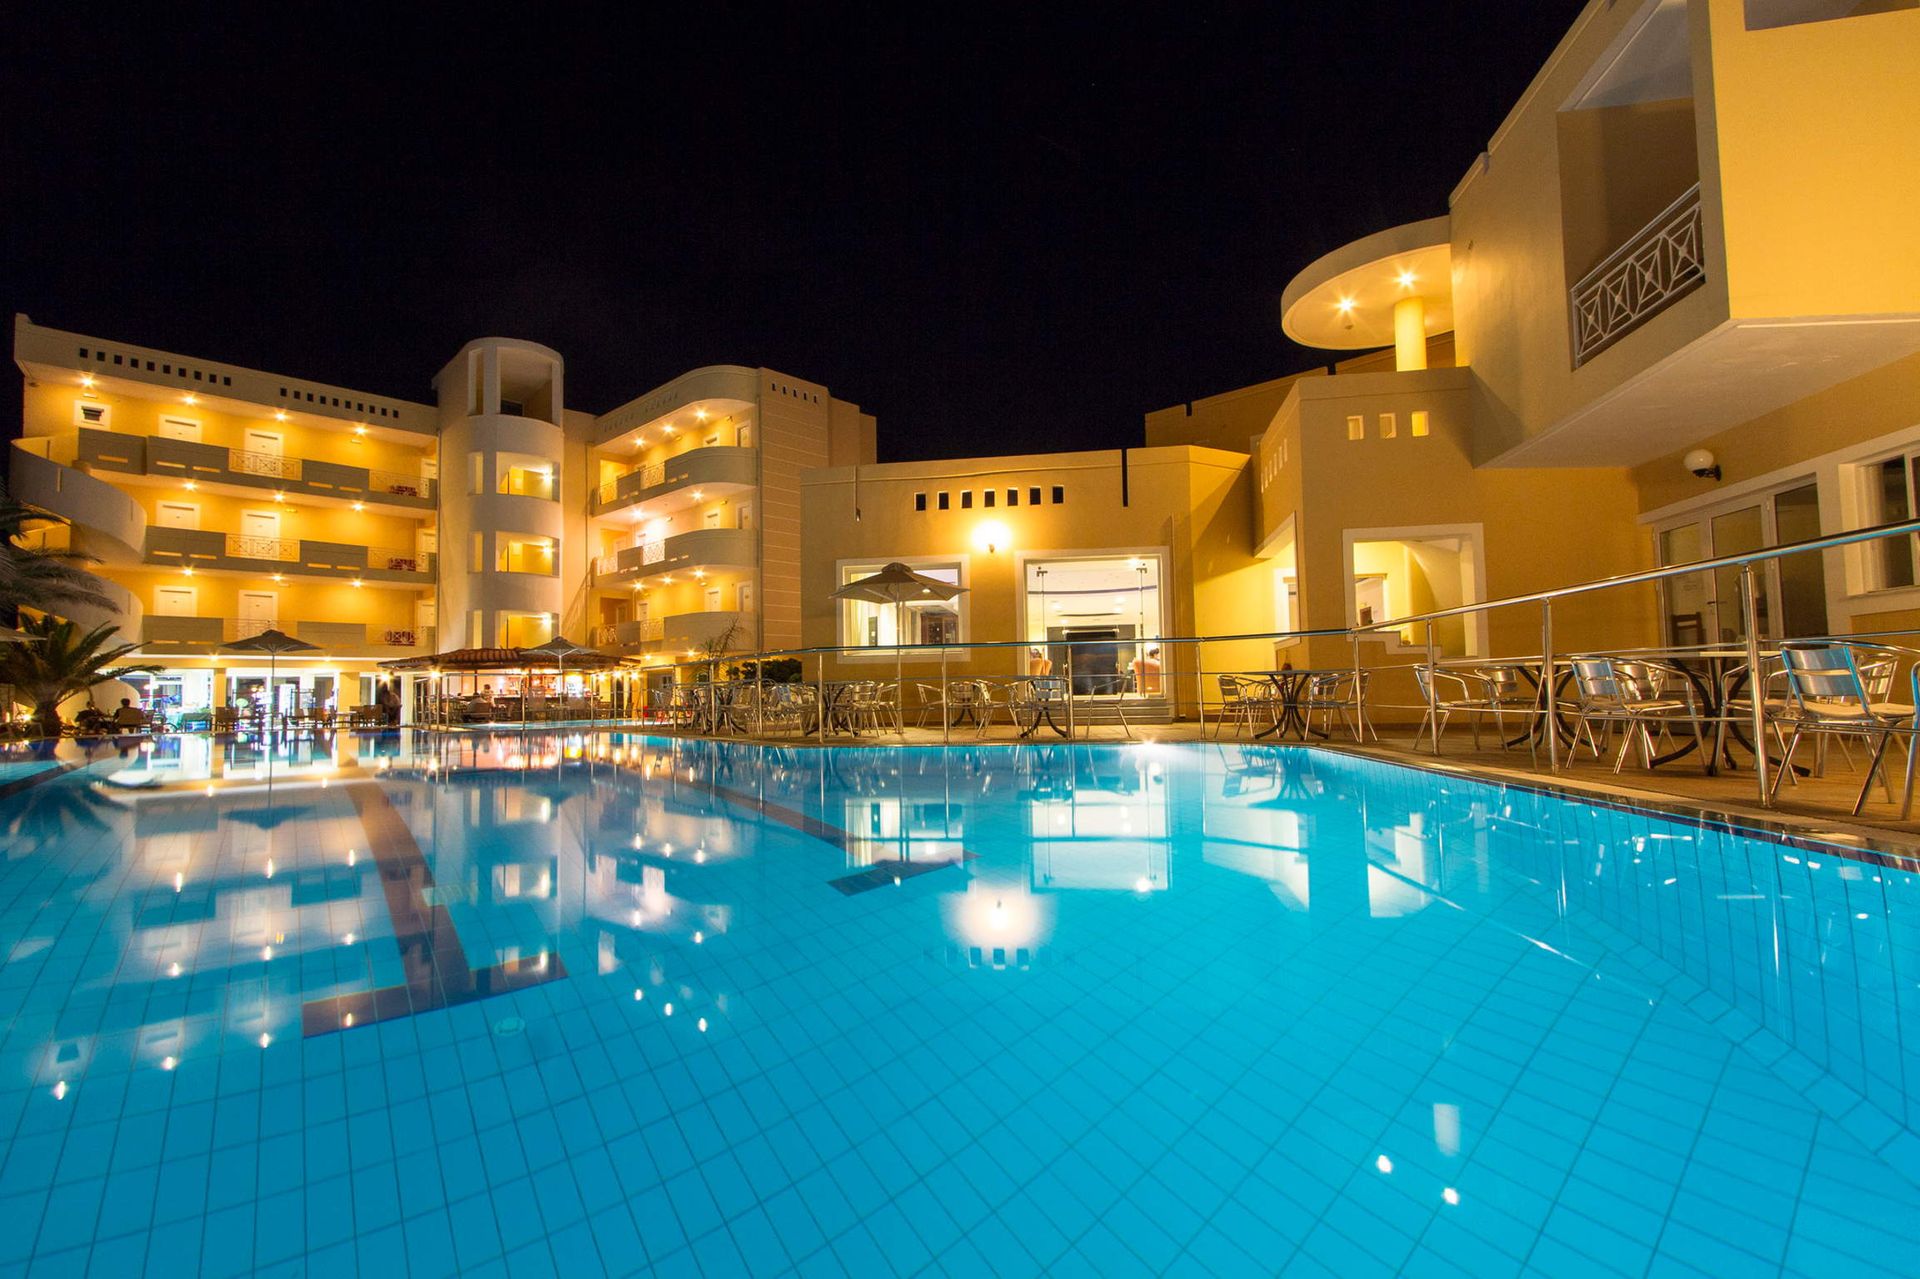 Sunny Bay Hotel - Κίσσαμος, Κρήτη ✦ 2 Ημέρες (1 Διανυκτέρευση) ✦ 2 άτομα + 1 παιδί έως 11 ετών ✦ Χωρίς Πρωινό ✦ 01/05/2022 έως 30/09/2022 ✦ Μπροστά στην παραλία